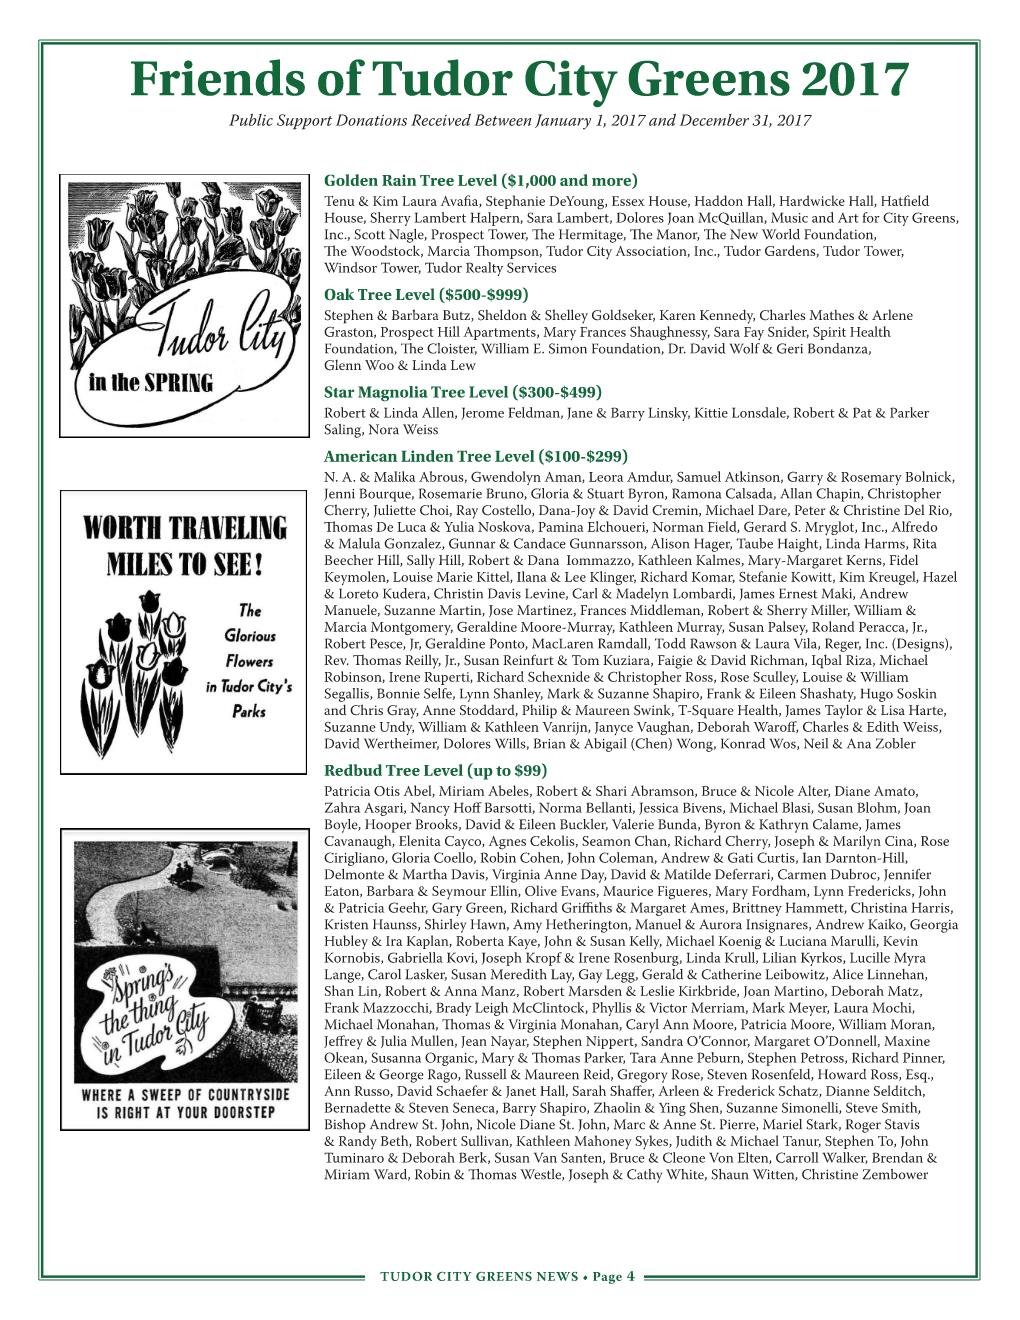 Tudor City Newsletter_Spring 2018_r4-2 Page 004.jpg